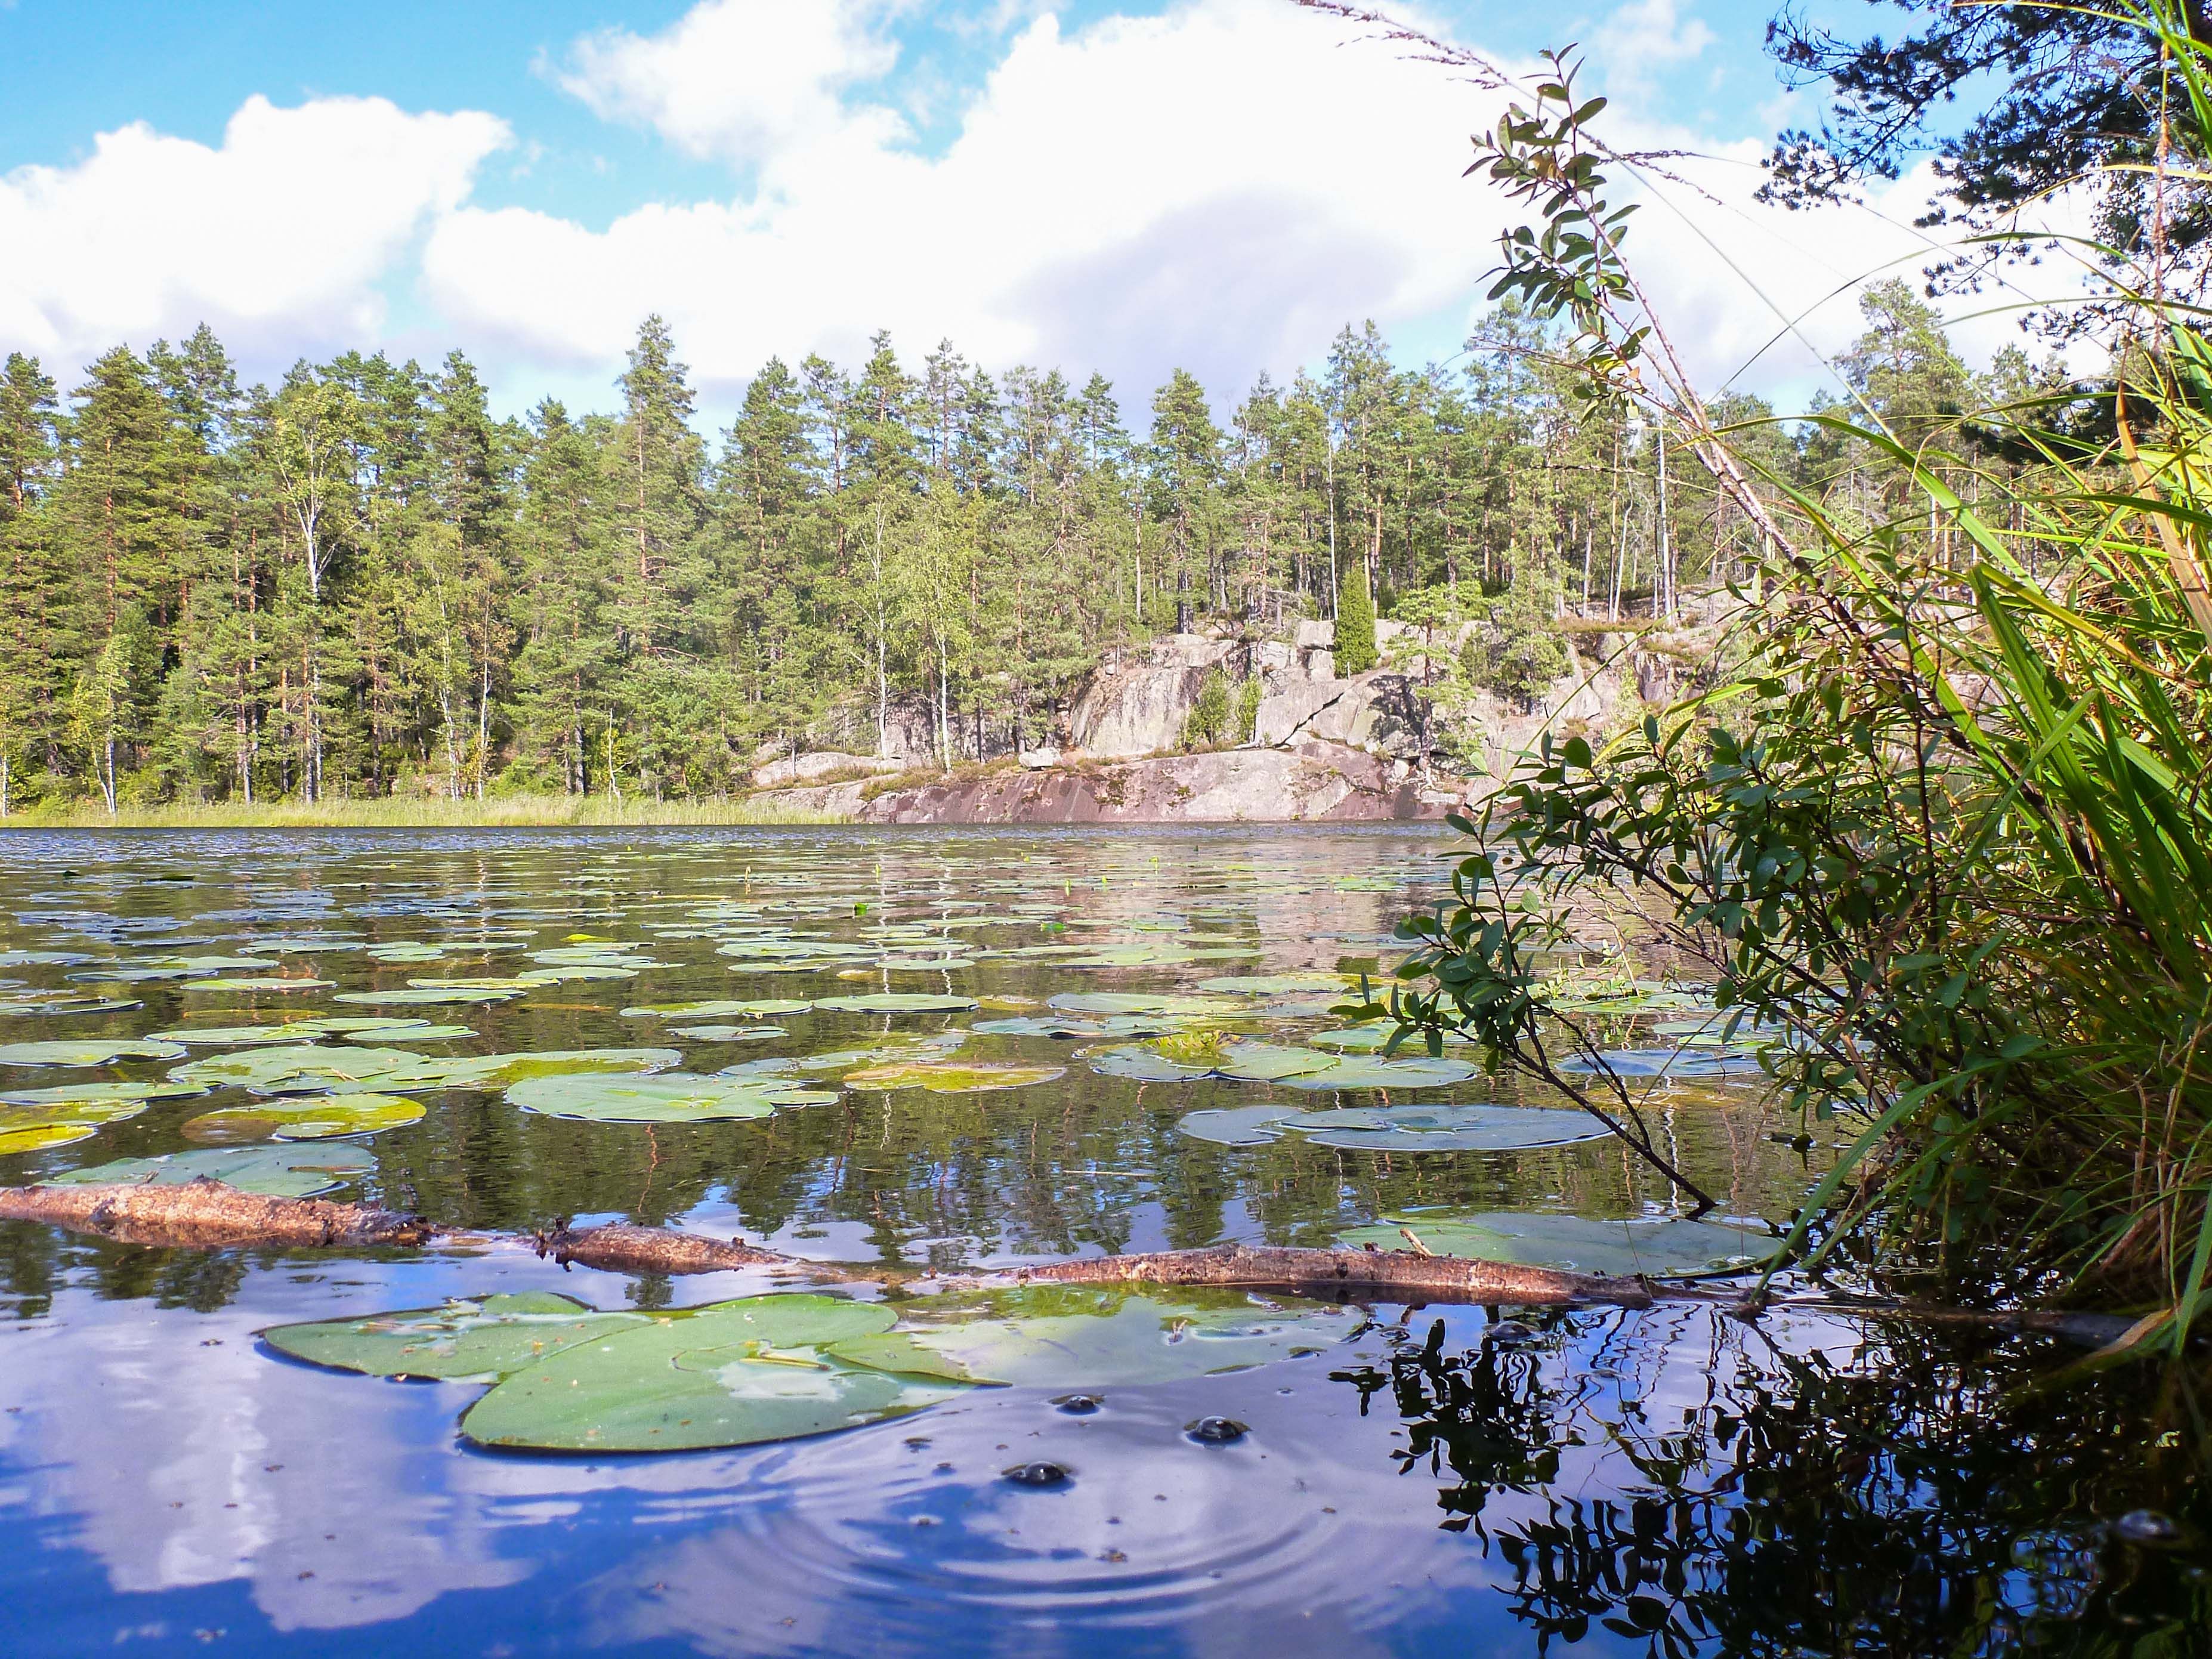 Названия финских озер. Озеро Штерн Финляндия. Озерное плато Финляндии. Финляндия тысяча озер. Озёра саволлины Финляндия.